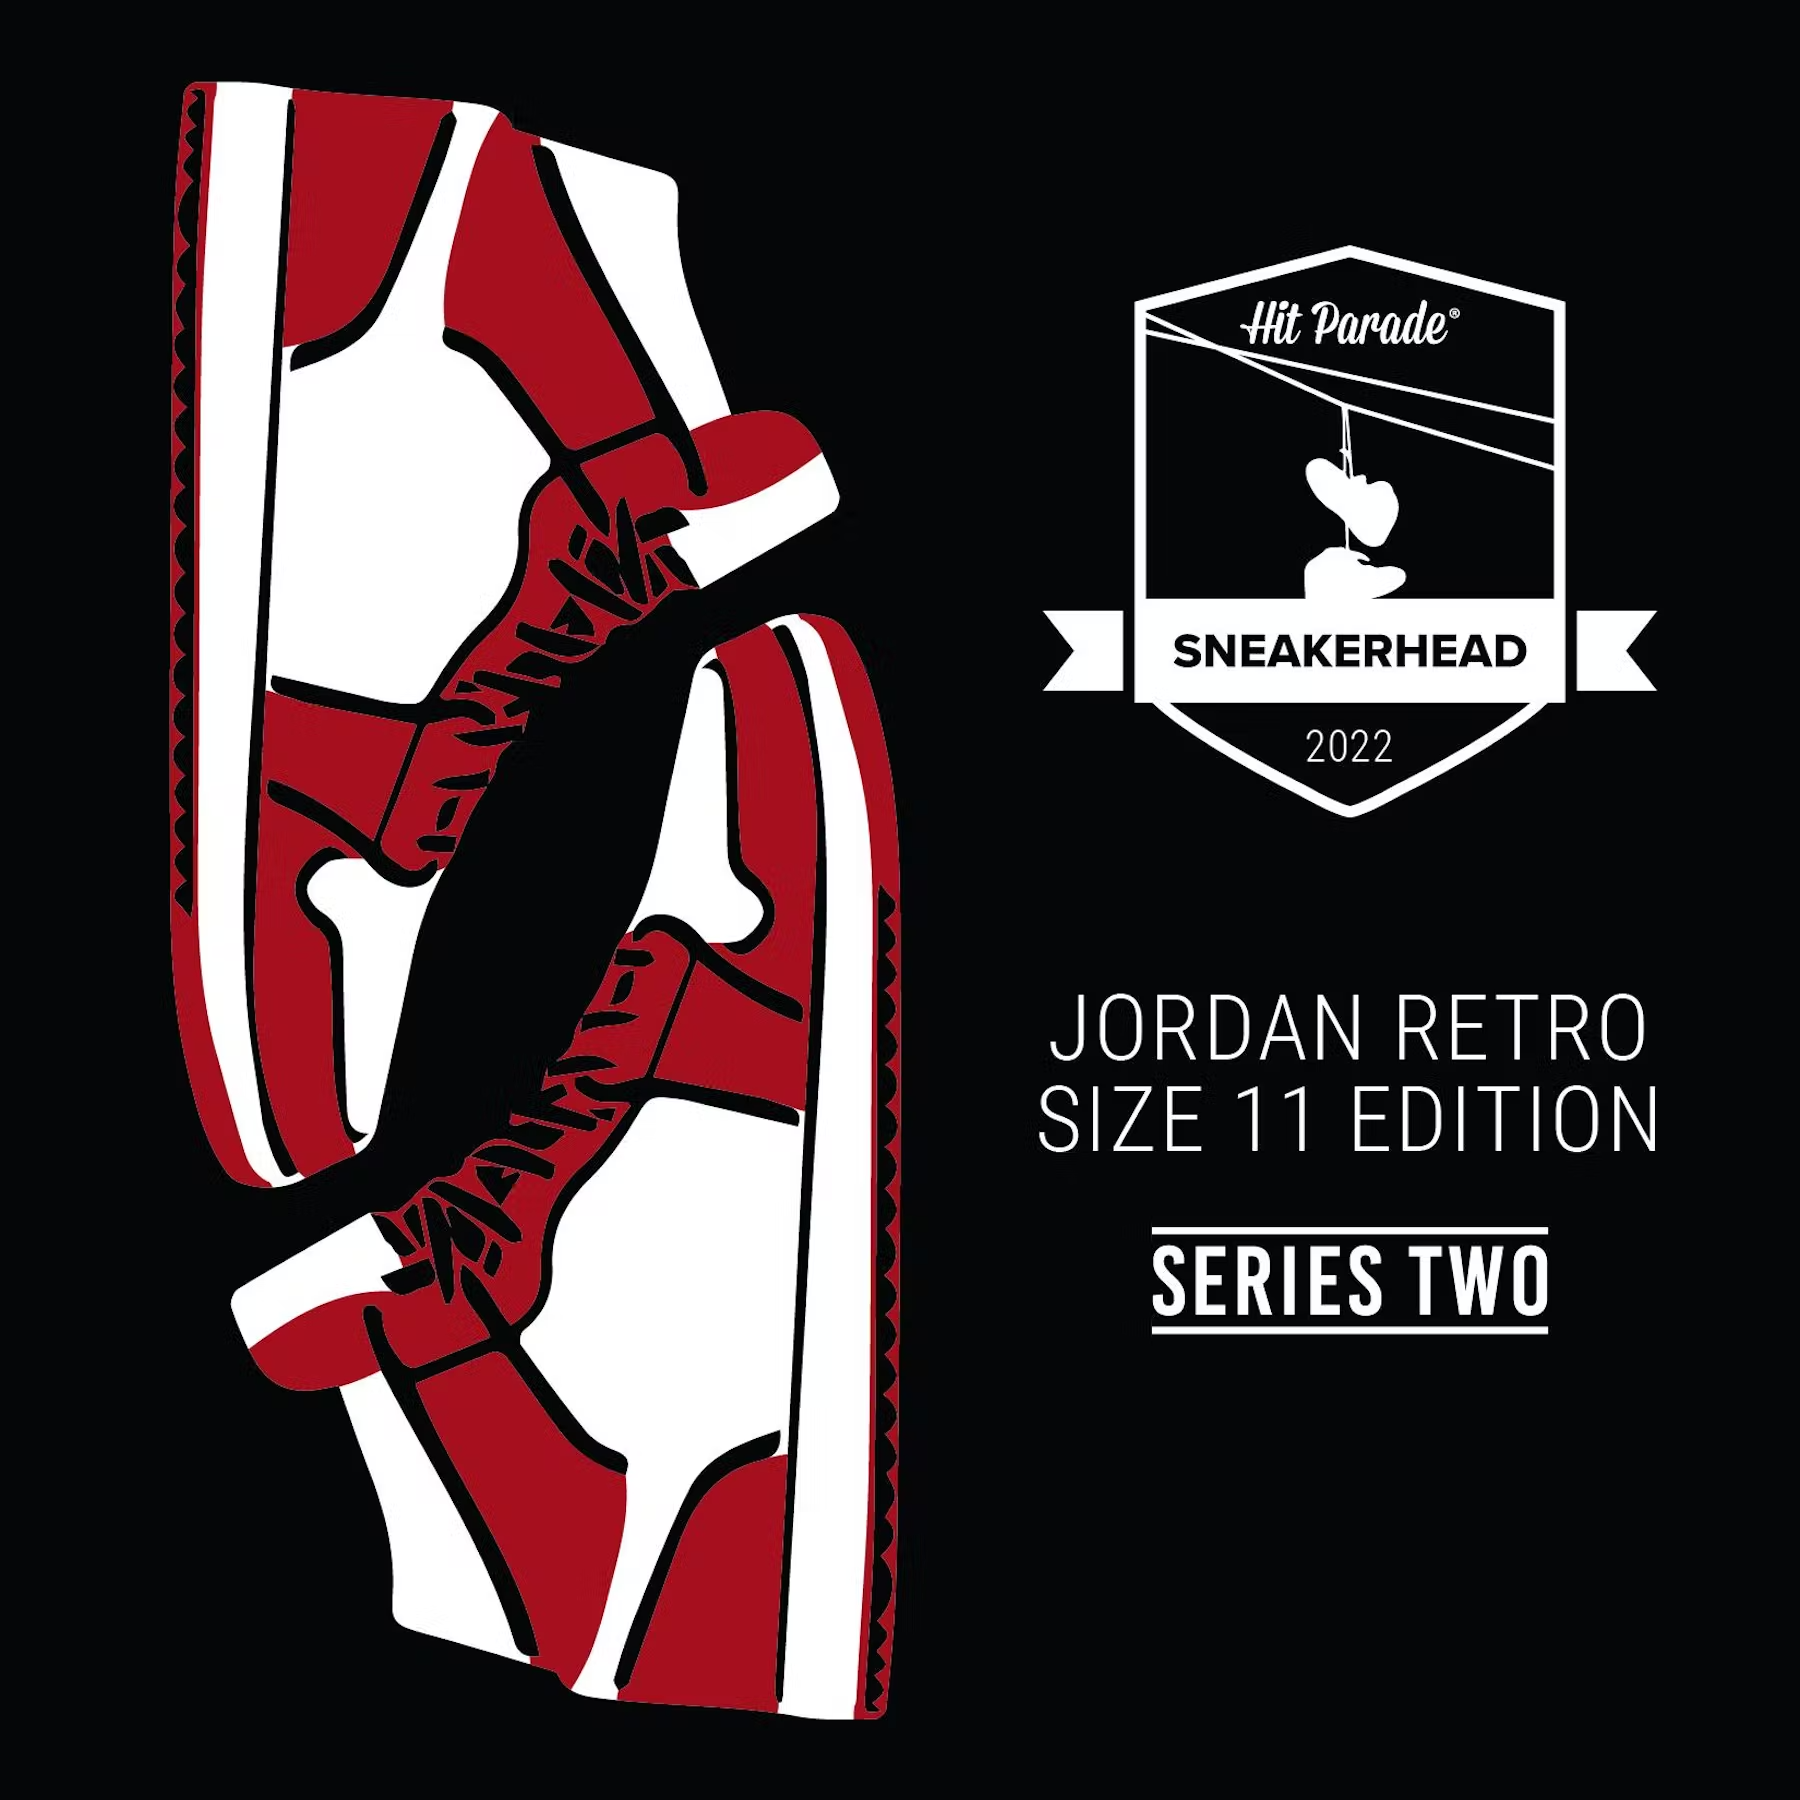 Sneakerhead Jordan Retro Size 11 Edition Series 2 Hobby Box